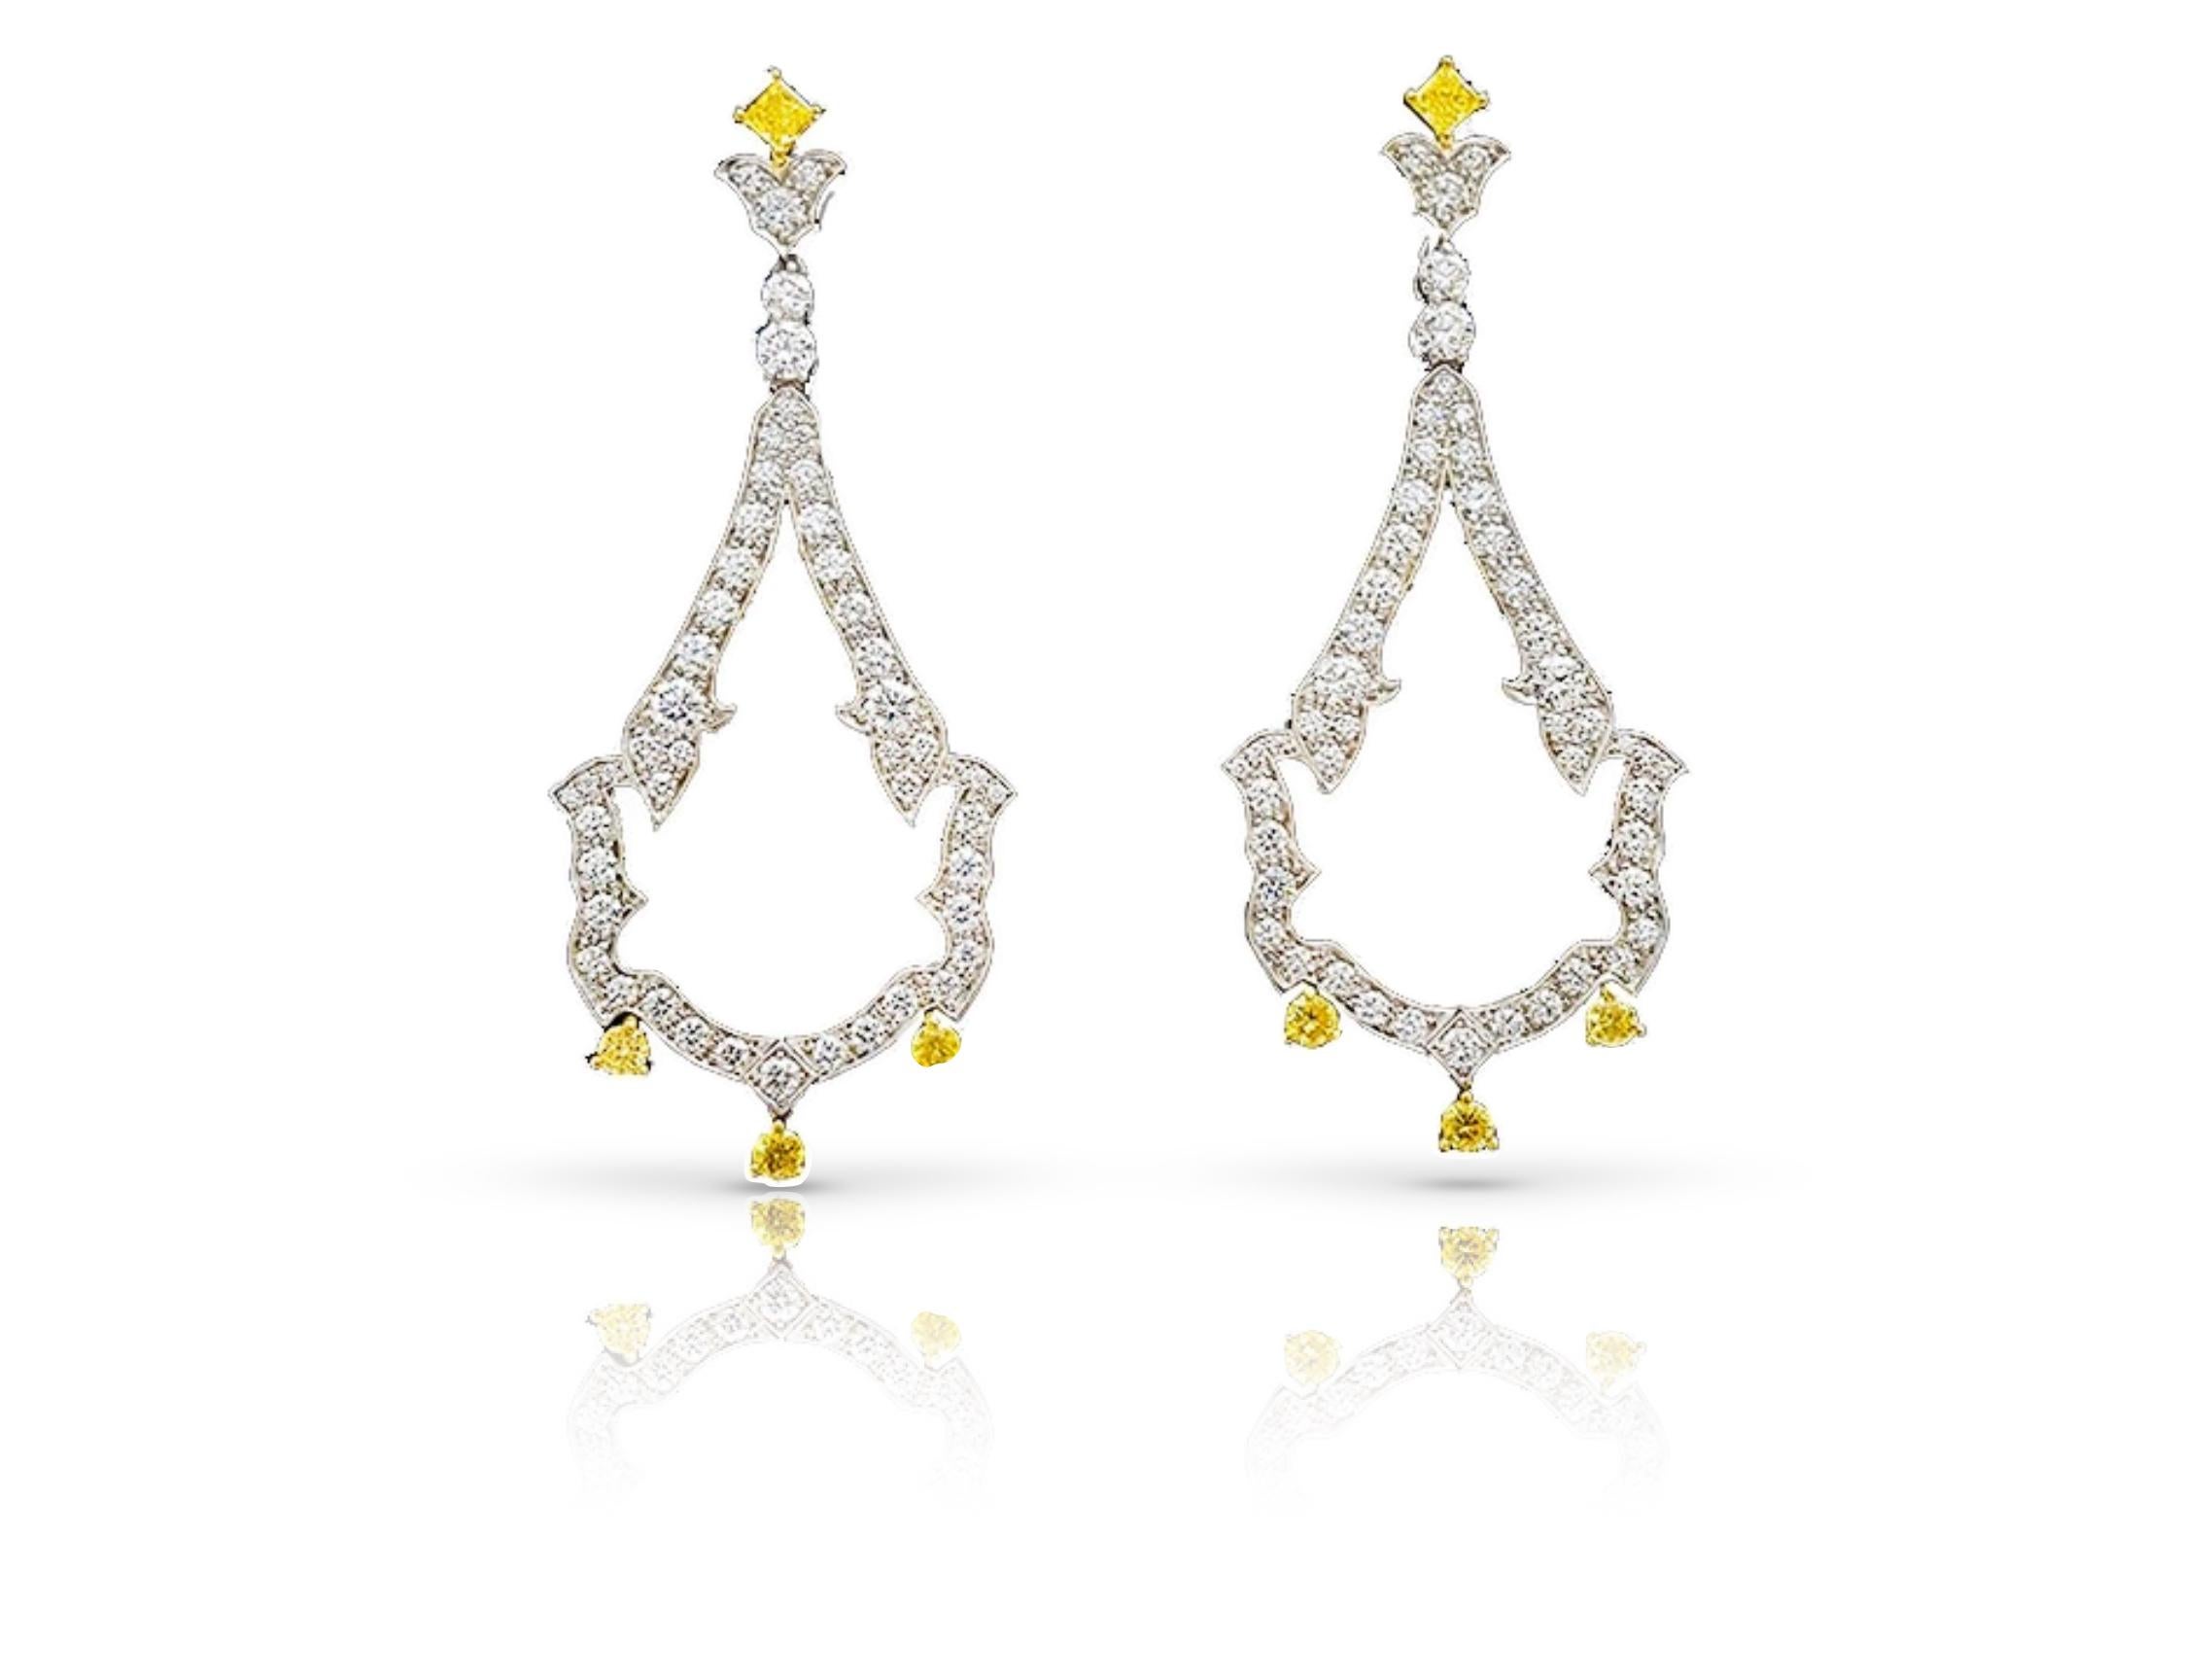 Contemporary 3.12 Carat Yellow Diamond & White Diamond Open-Work Dangle Earrings in 18K Gold. For Sale